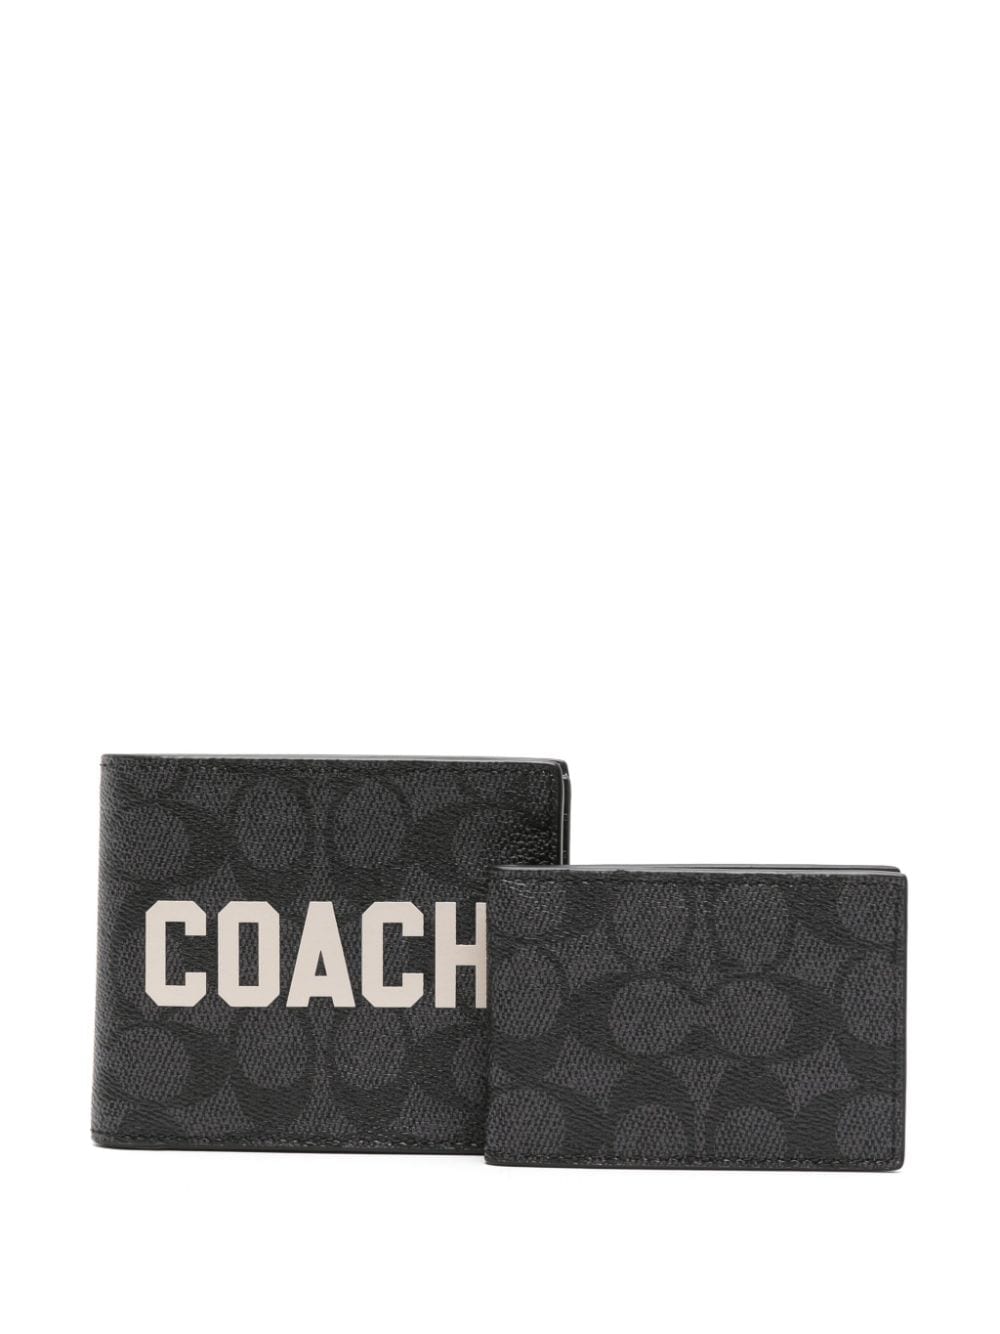 Image 1 of Coach monogram bi-fold leather wallet